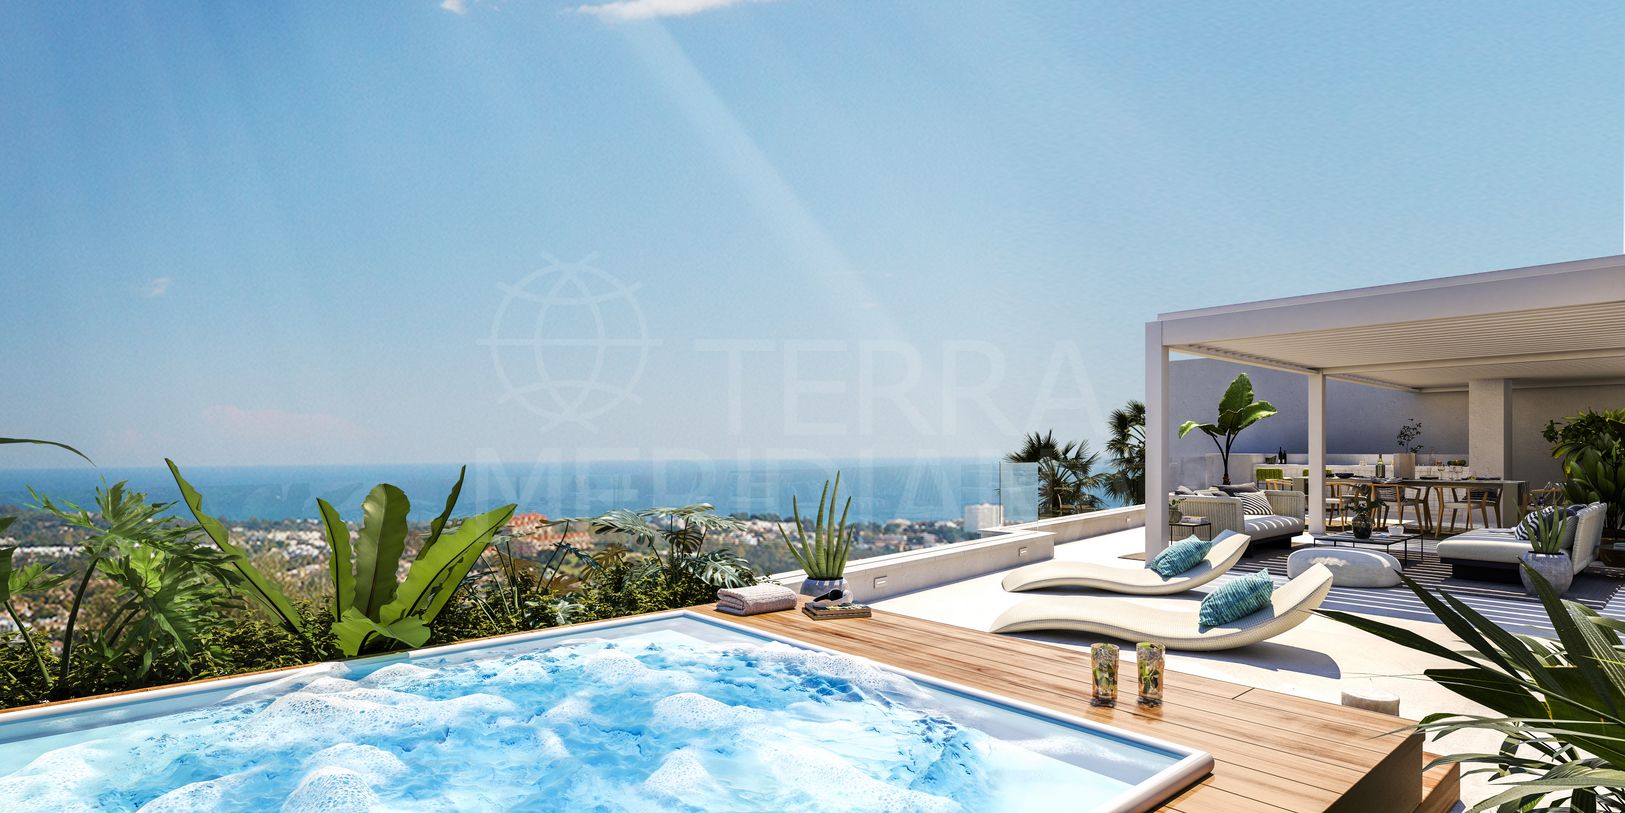 Grand View, Benahavis - Exclusive new development with 7 luxury apartments near La Quinta Golf Resort